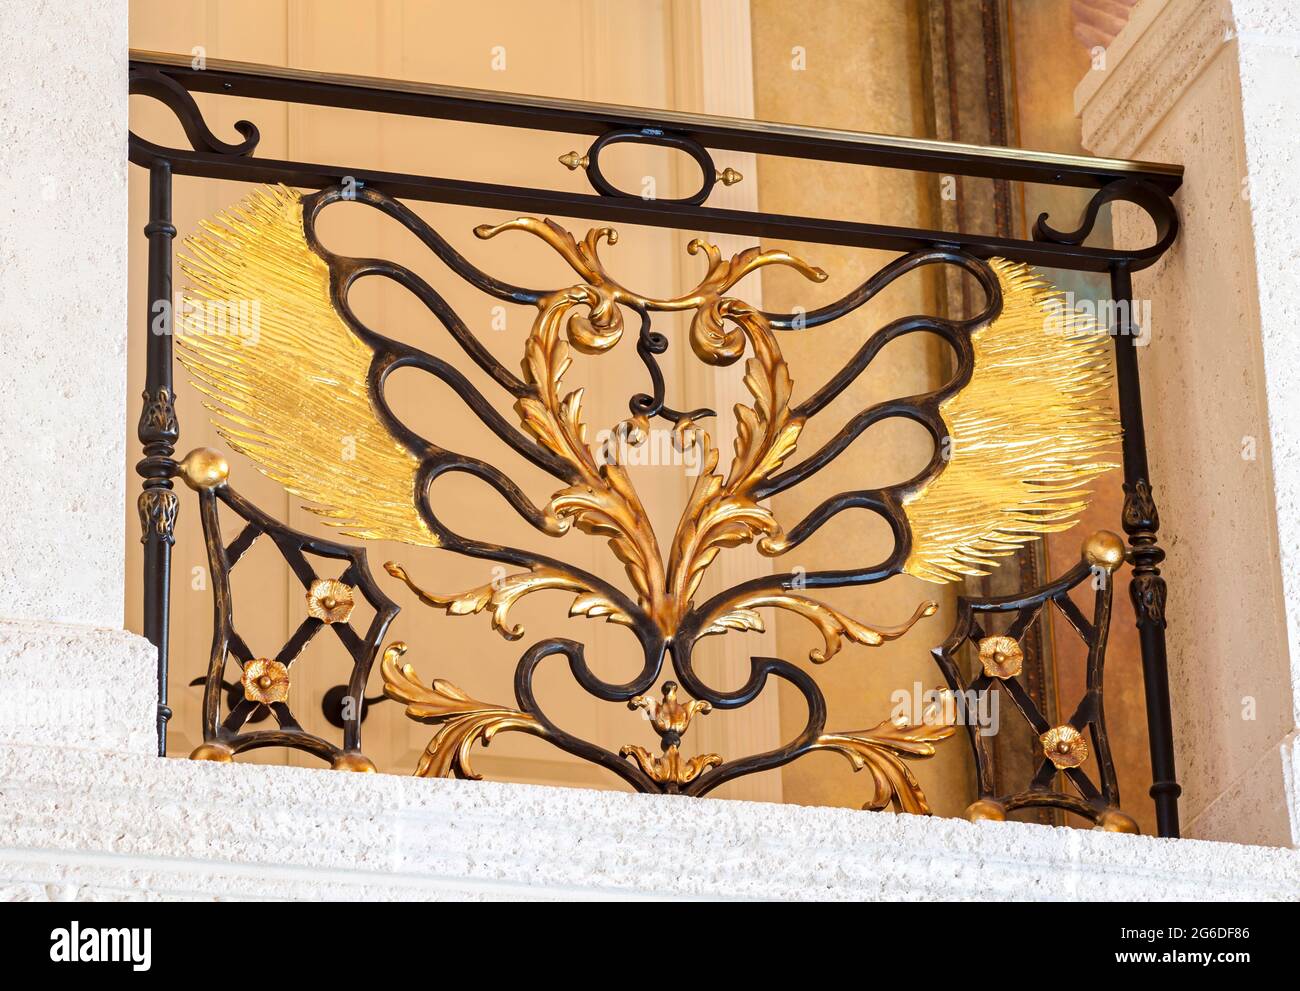 non forged aluminum balustrade decorative metalwork Stock Photo